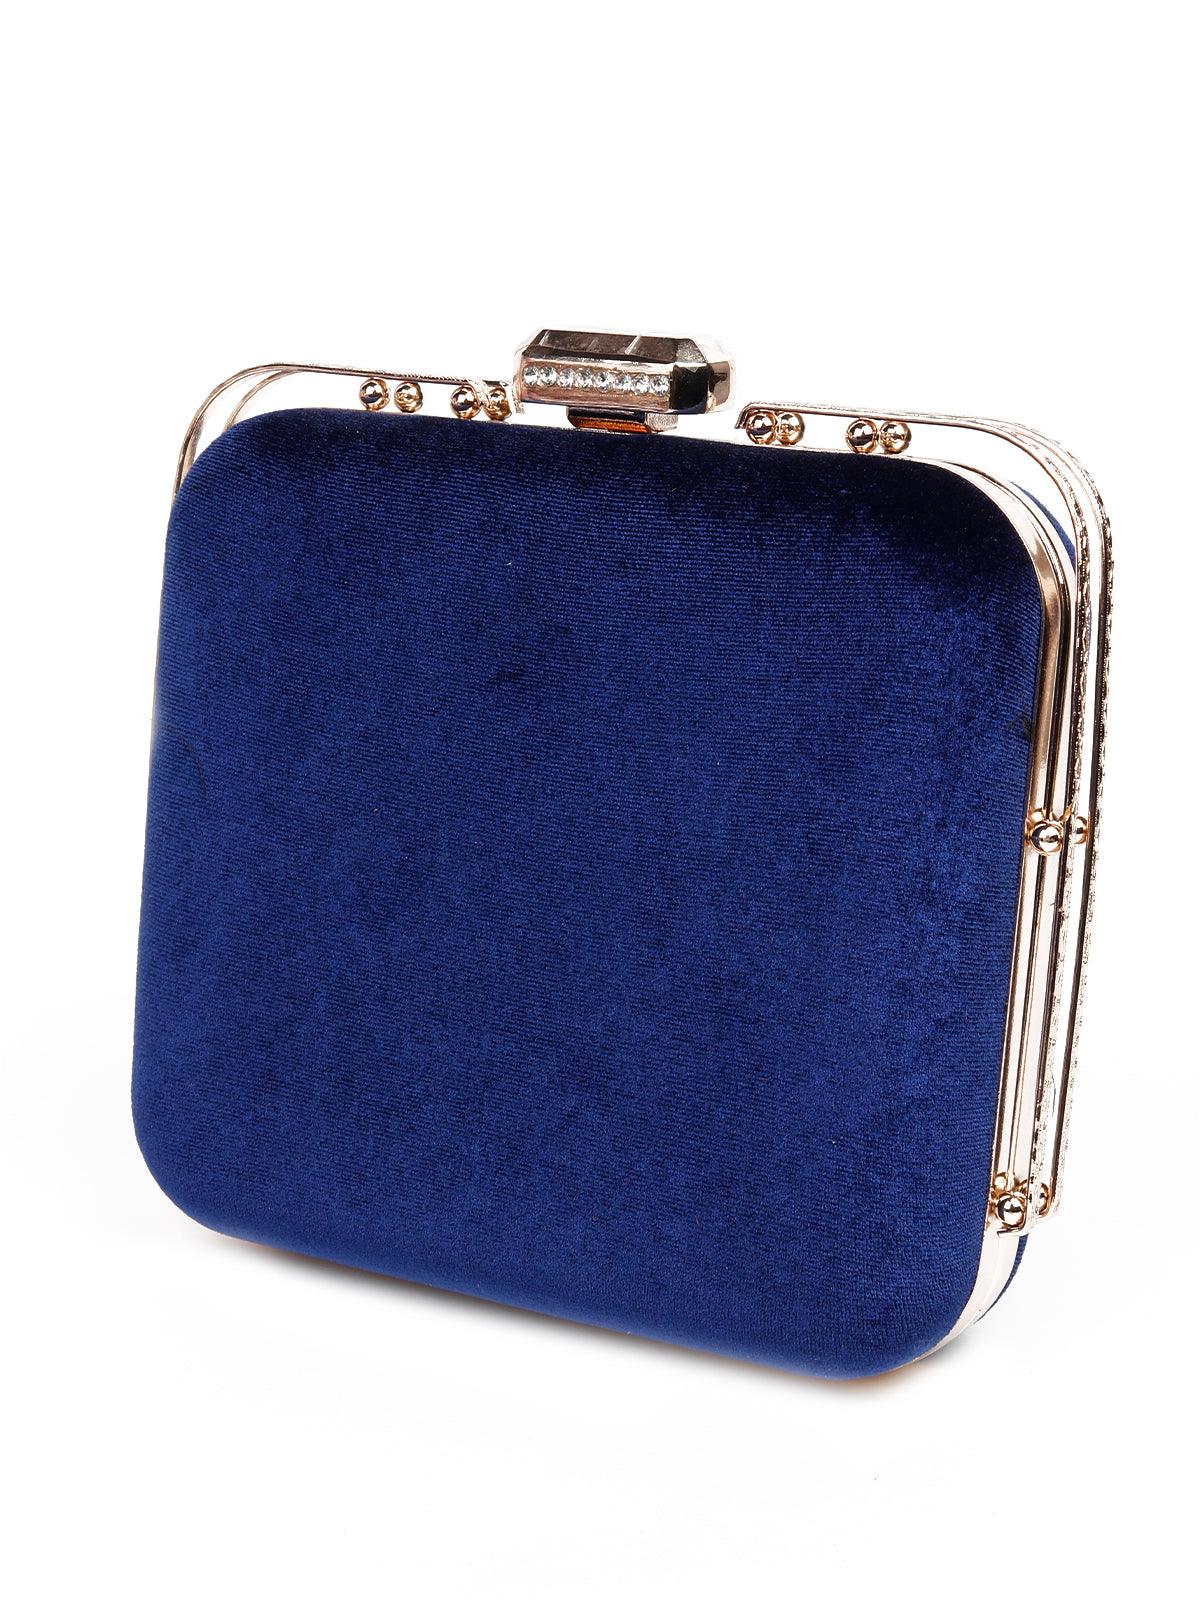 Royal Blue Handbags - Buy Royal Blue Handbags online in India